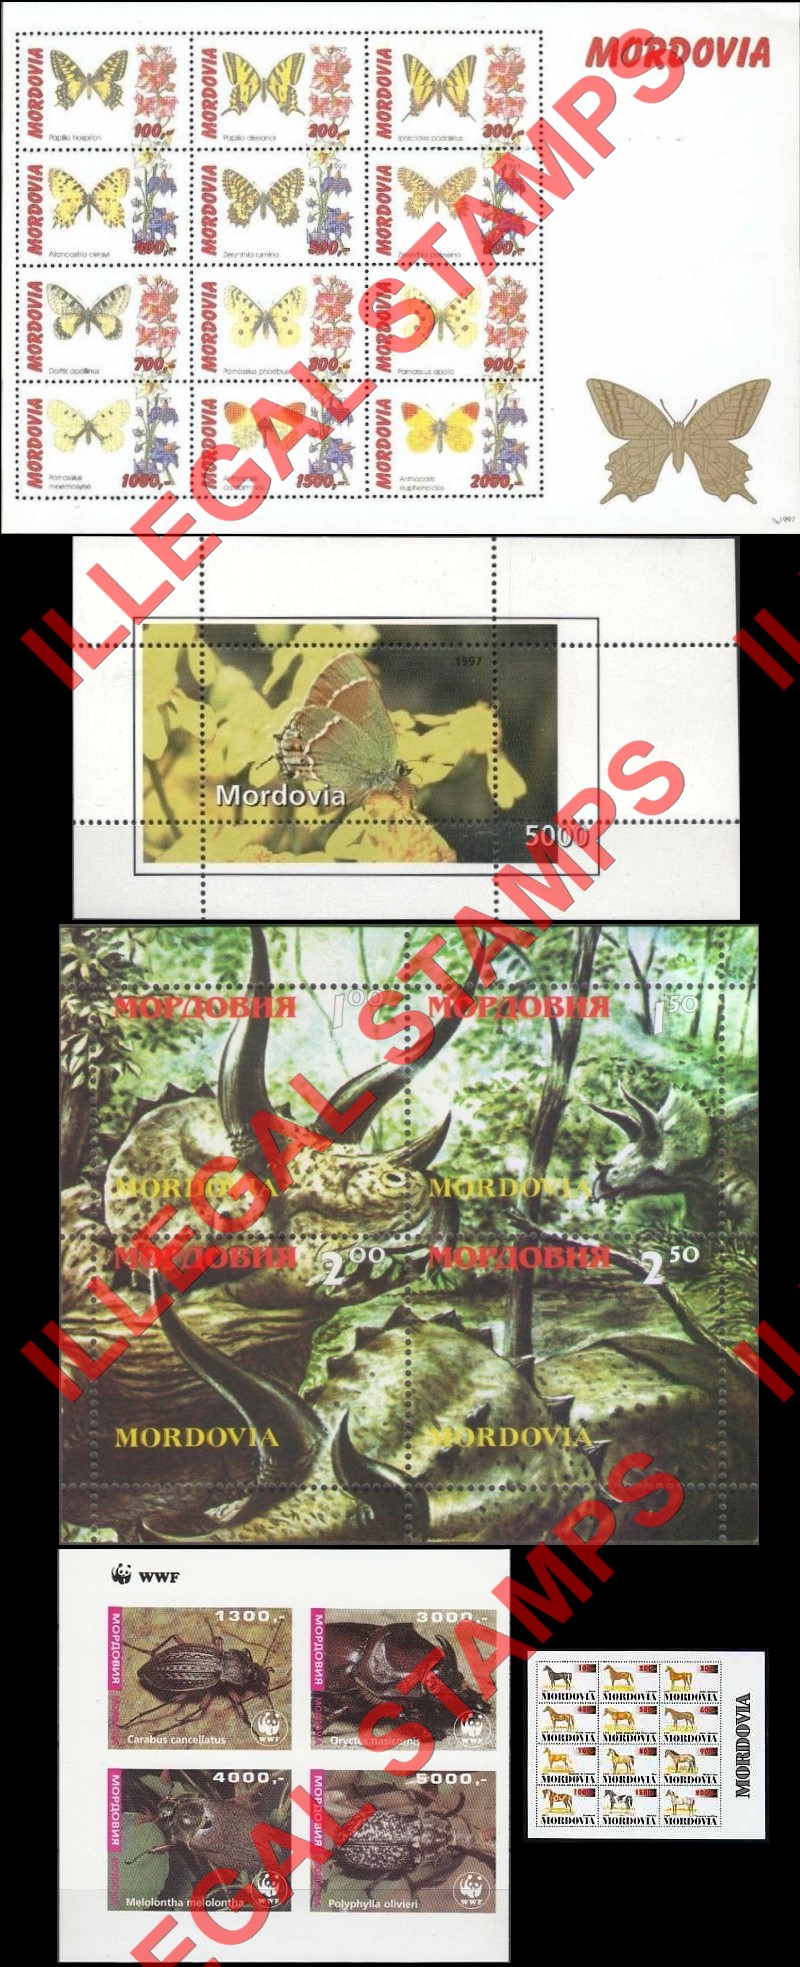 Republic of Mordovia 1997 Counterfeit Illegal Stamps (Part 2)